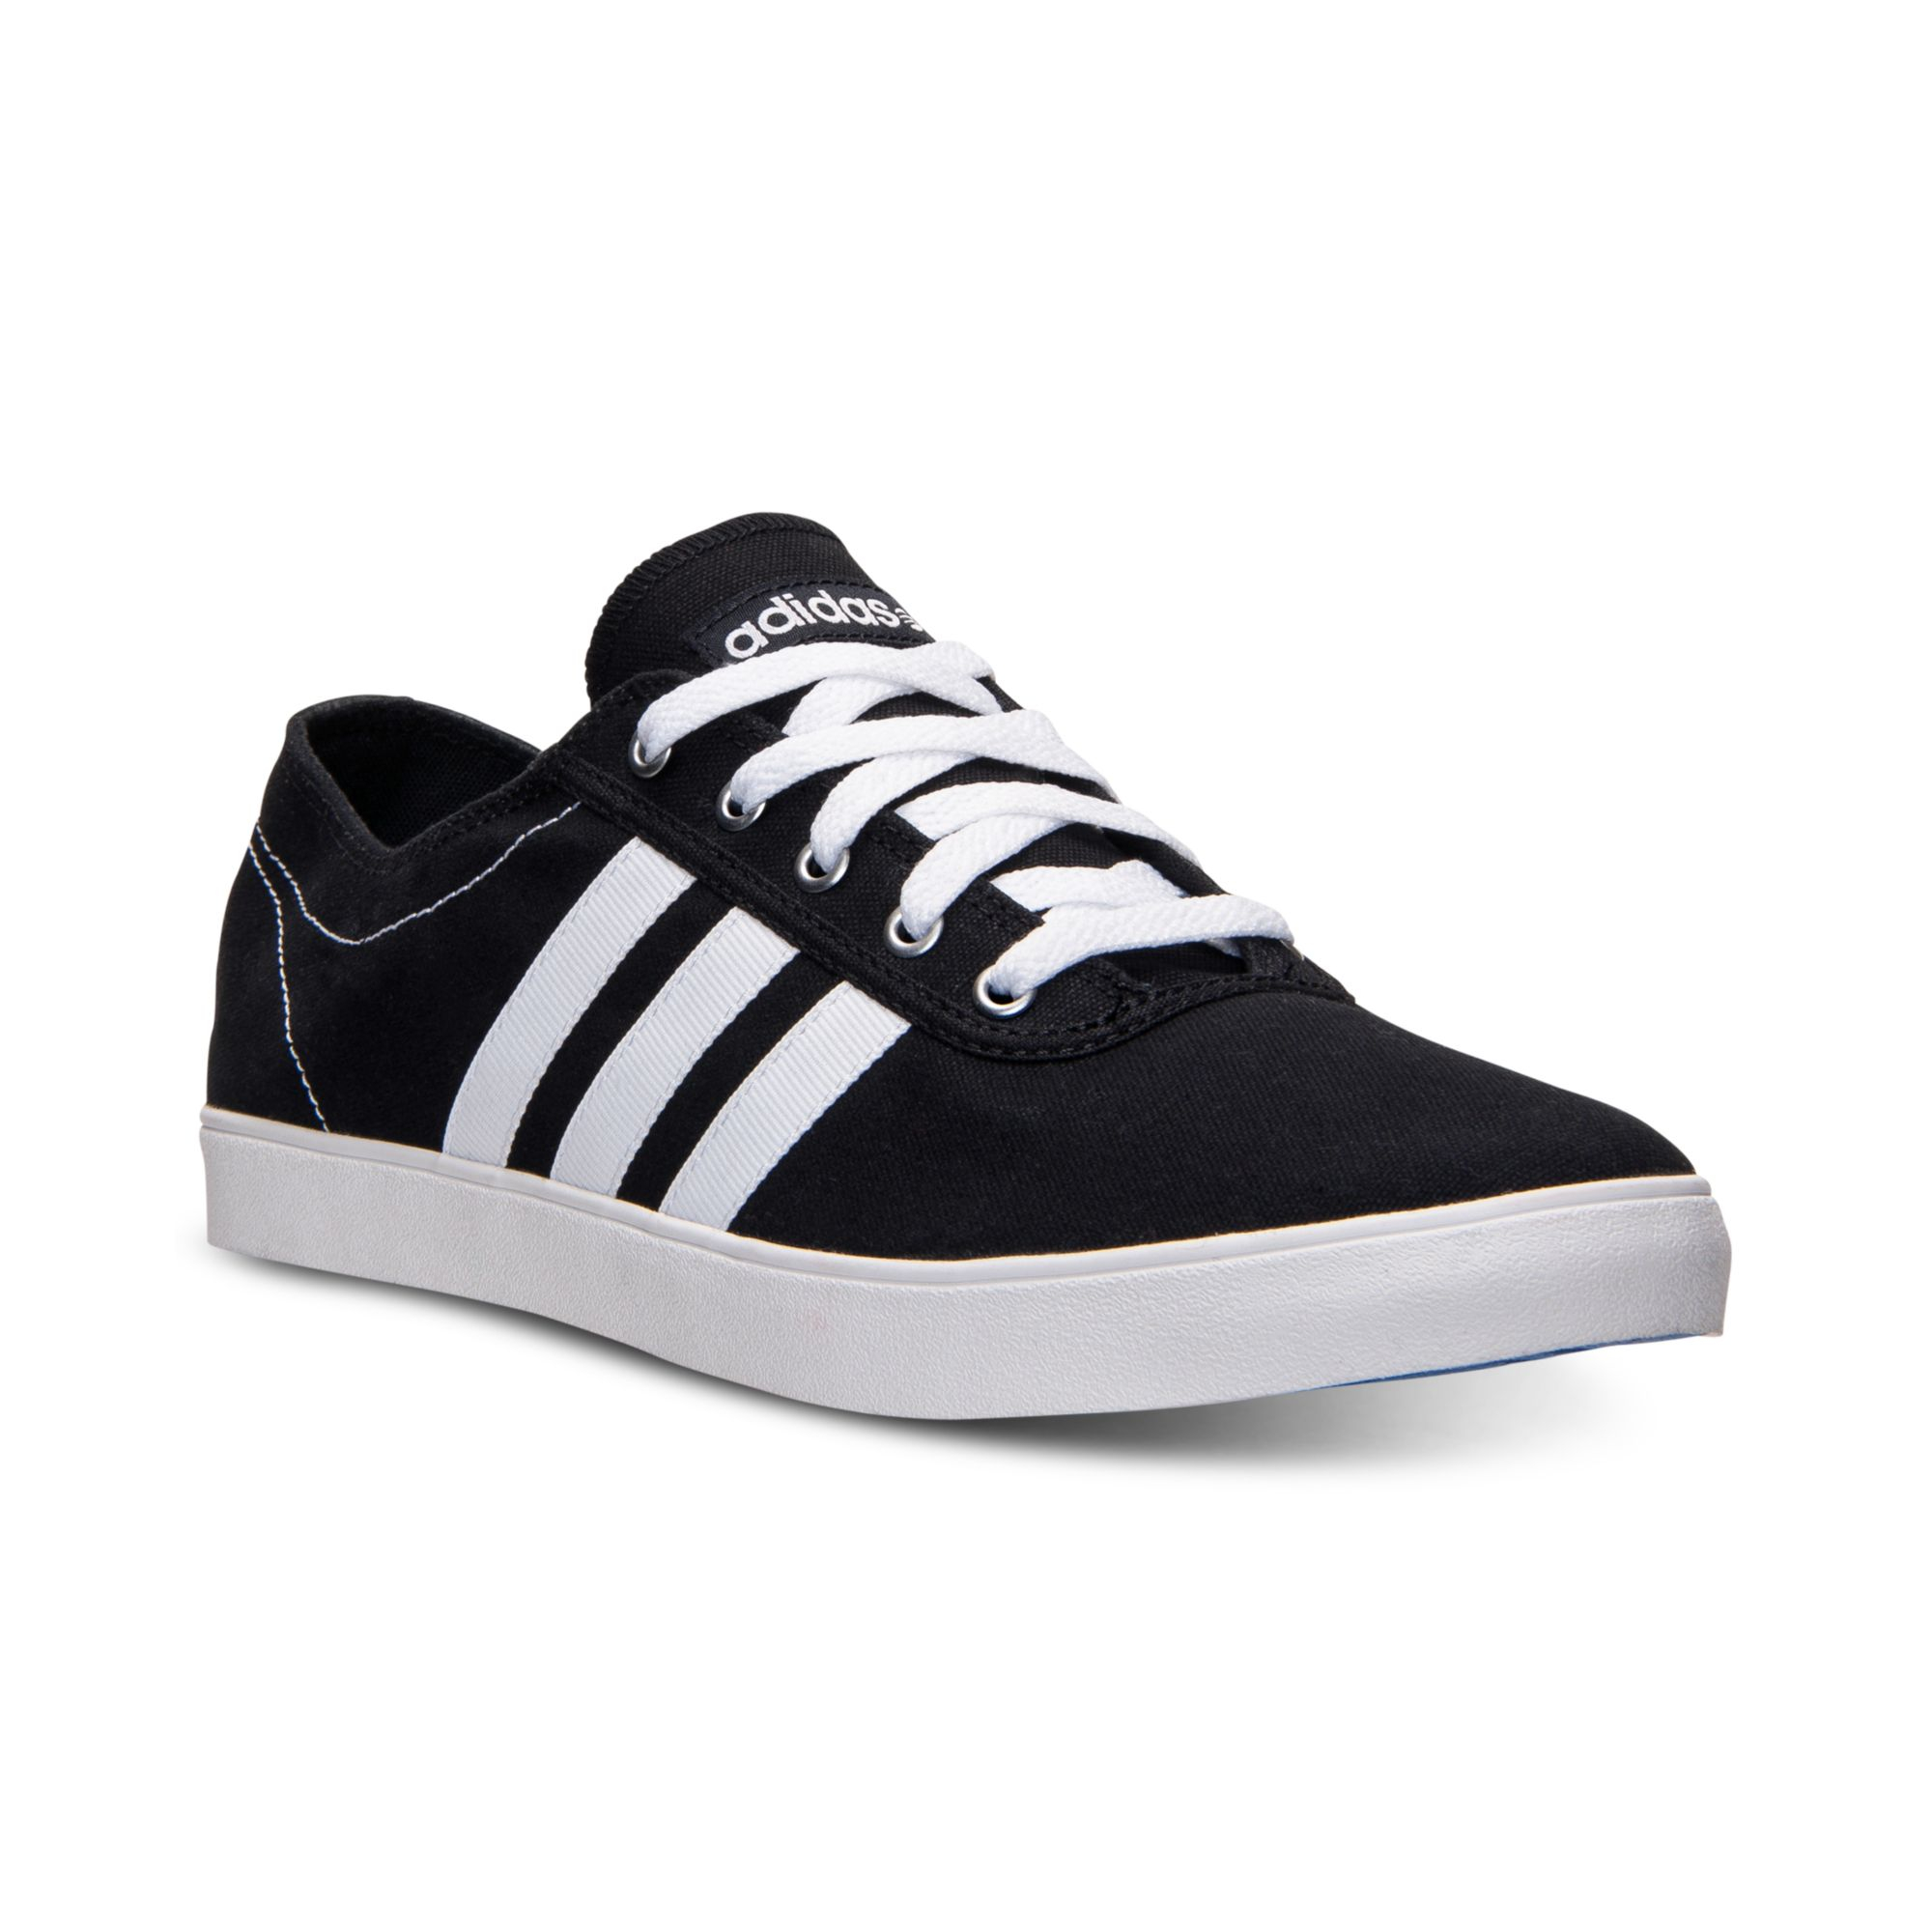 Adidas Men'S Neo Easy Vulc Ad Shoe Black White in Black